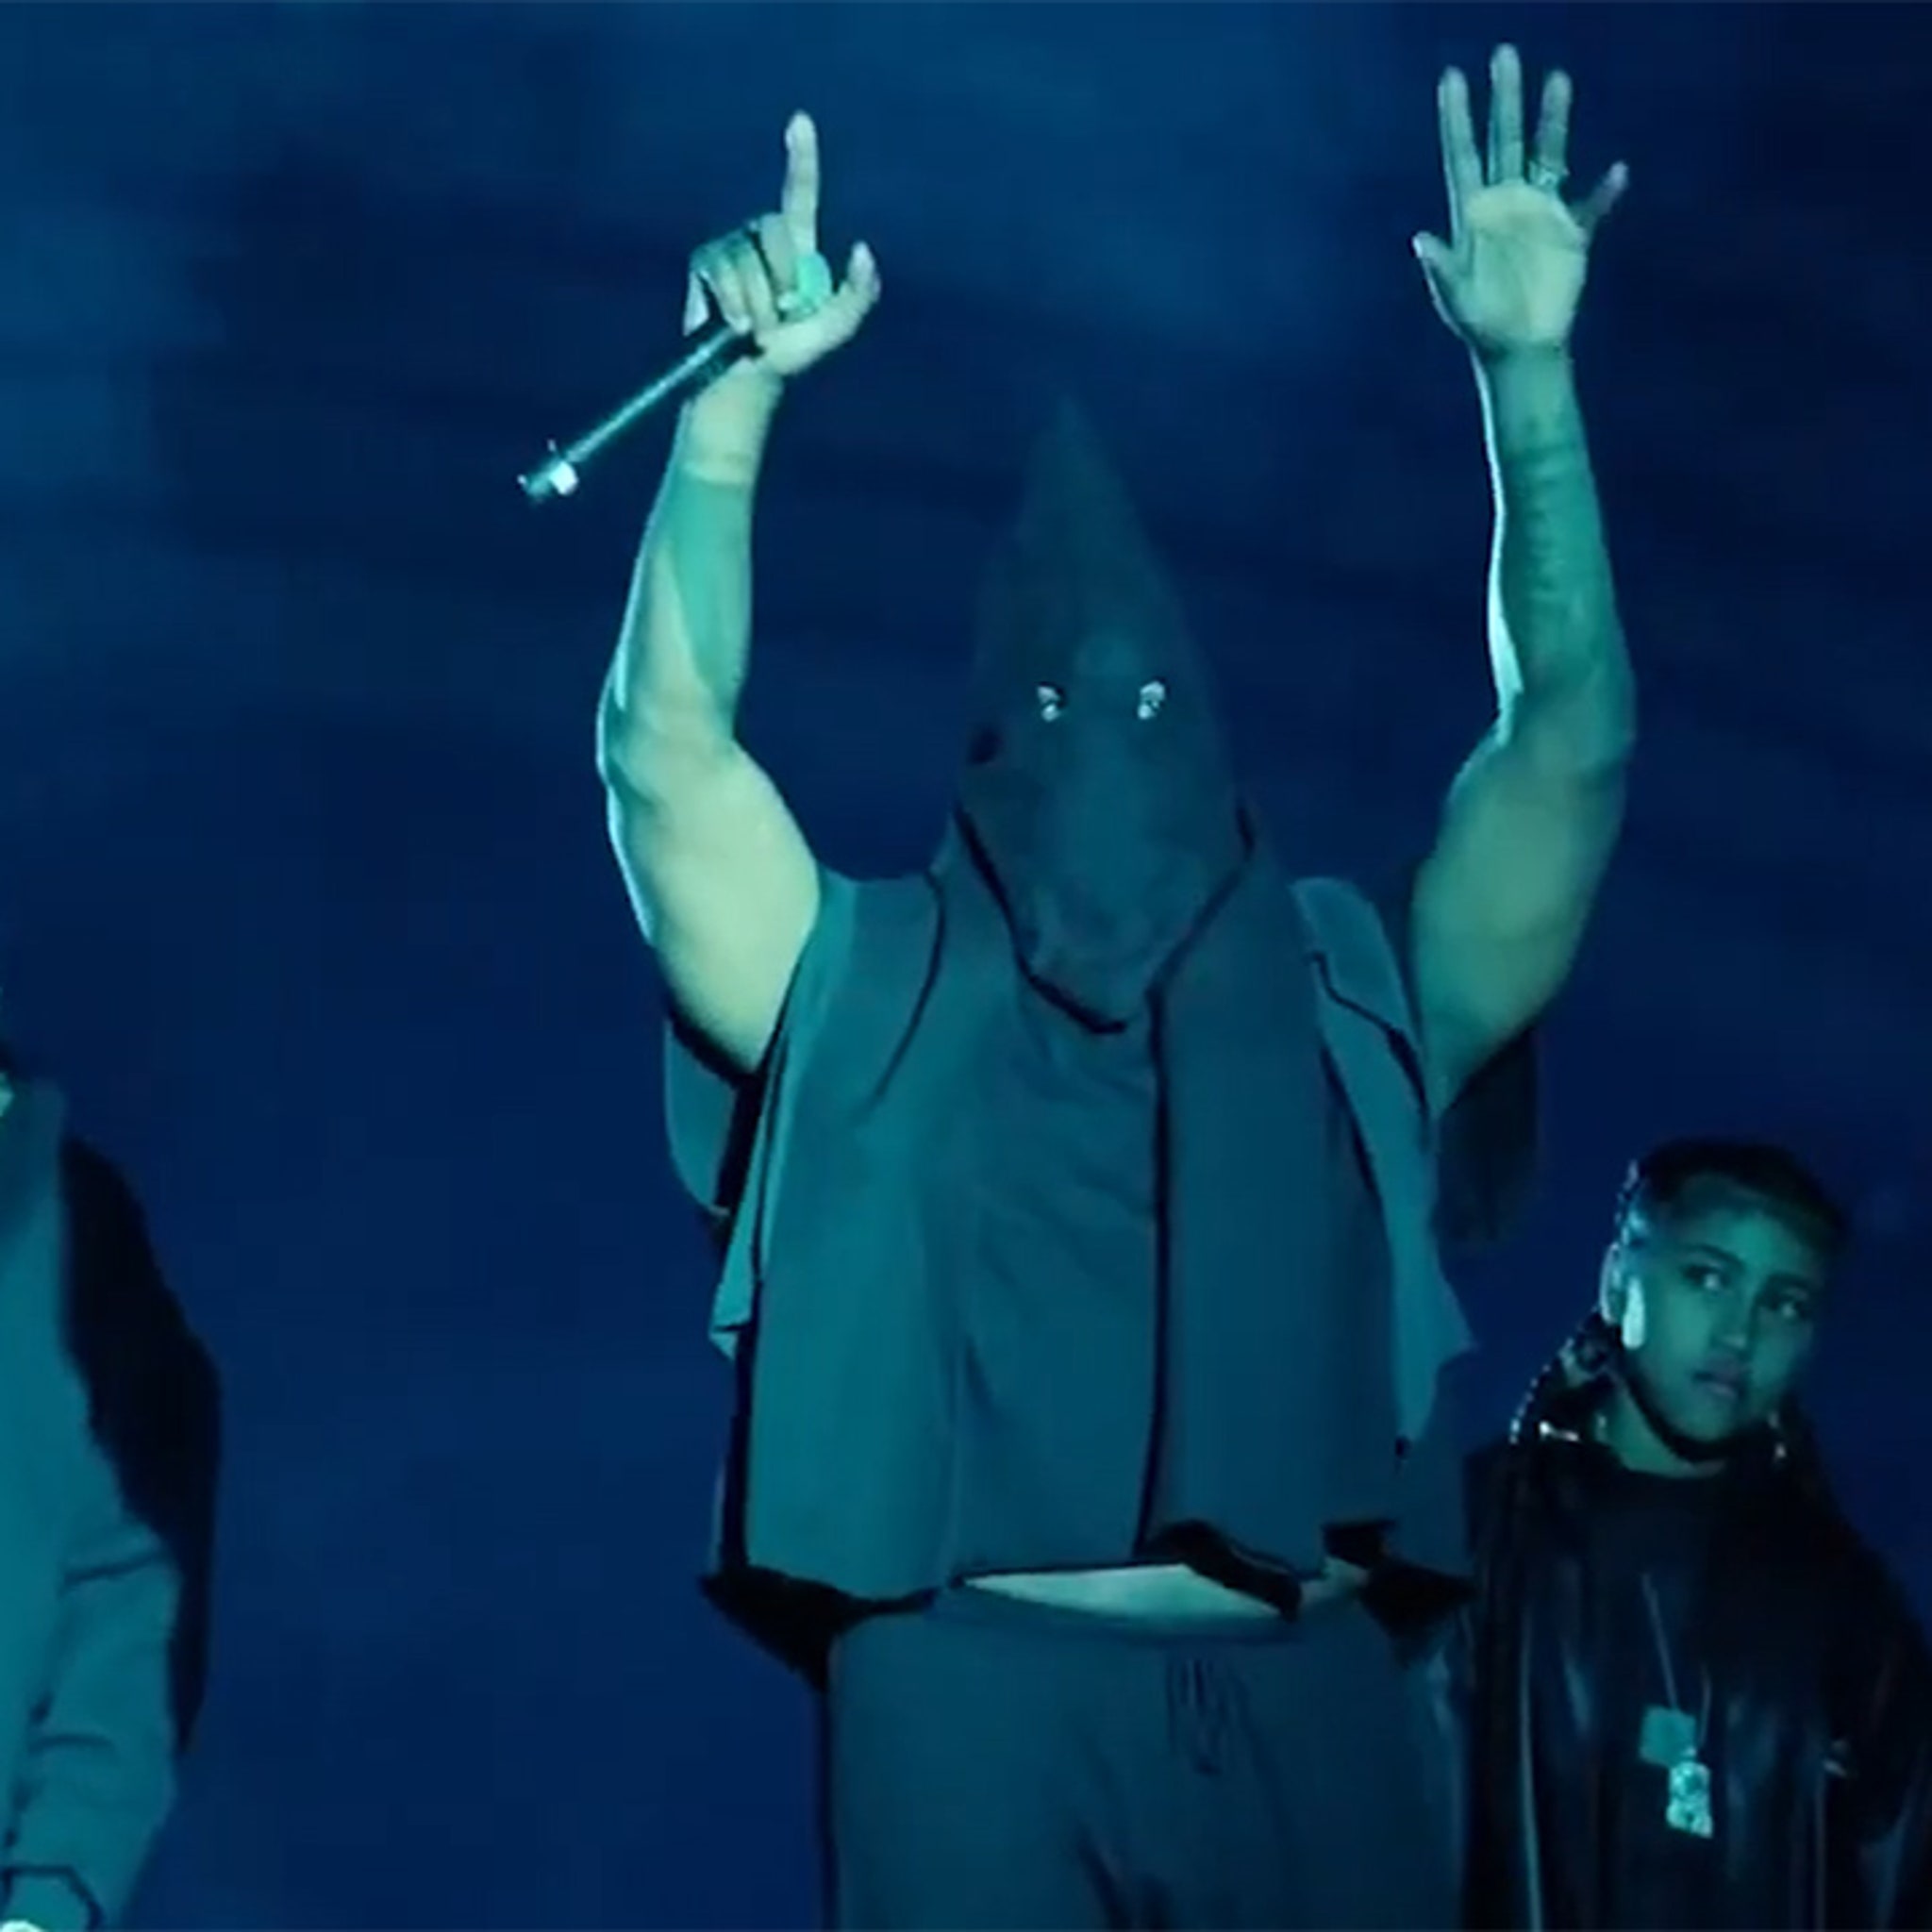 Kanye West usa roupa similar a da Ku Klux Klan e causa polêmica